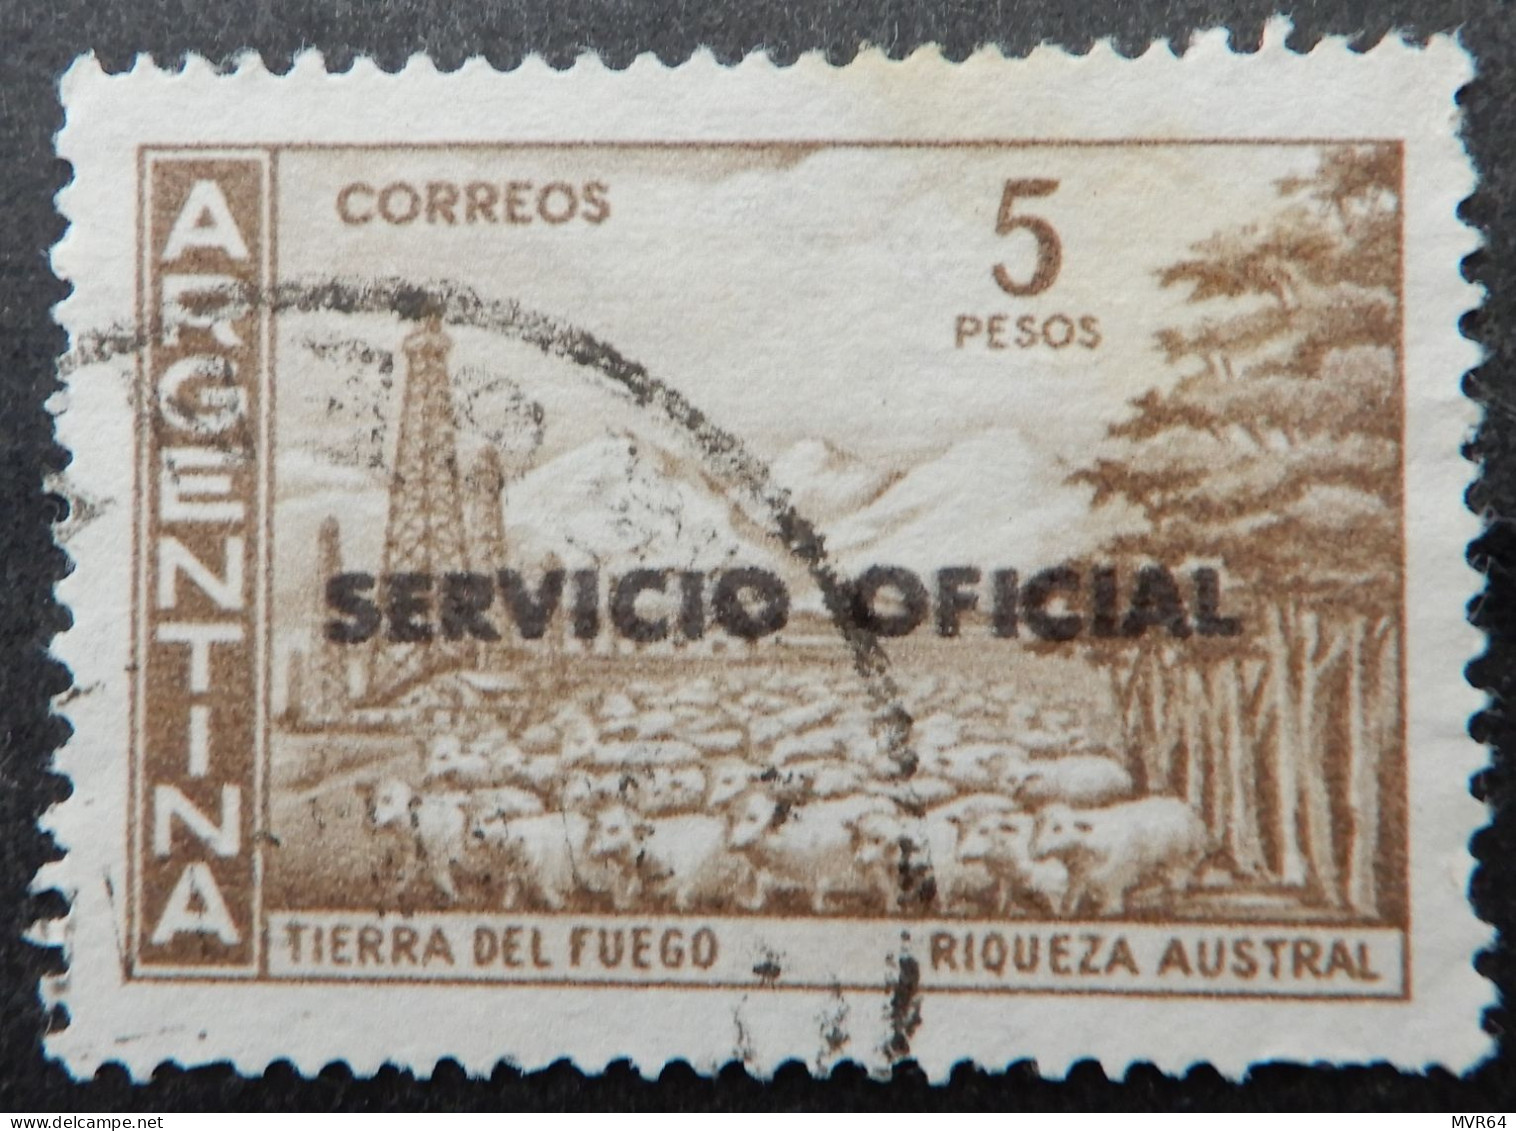 Argentinië Argentinia A 1959 (1) Tierra Del Fuego Riqueza Austral - Gebraucht